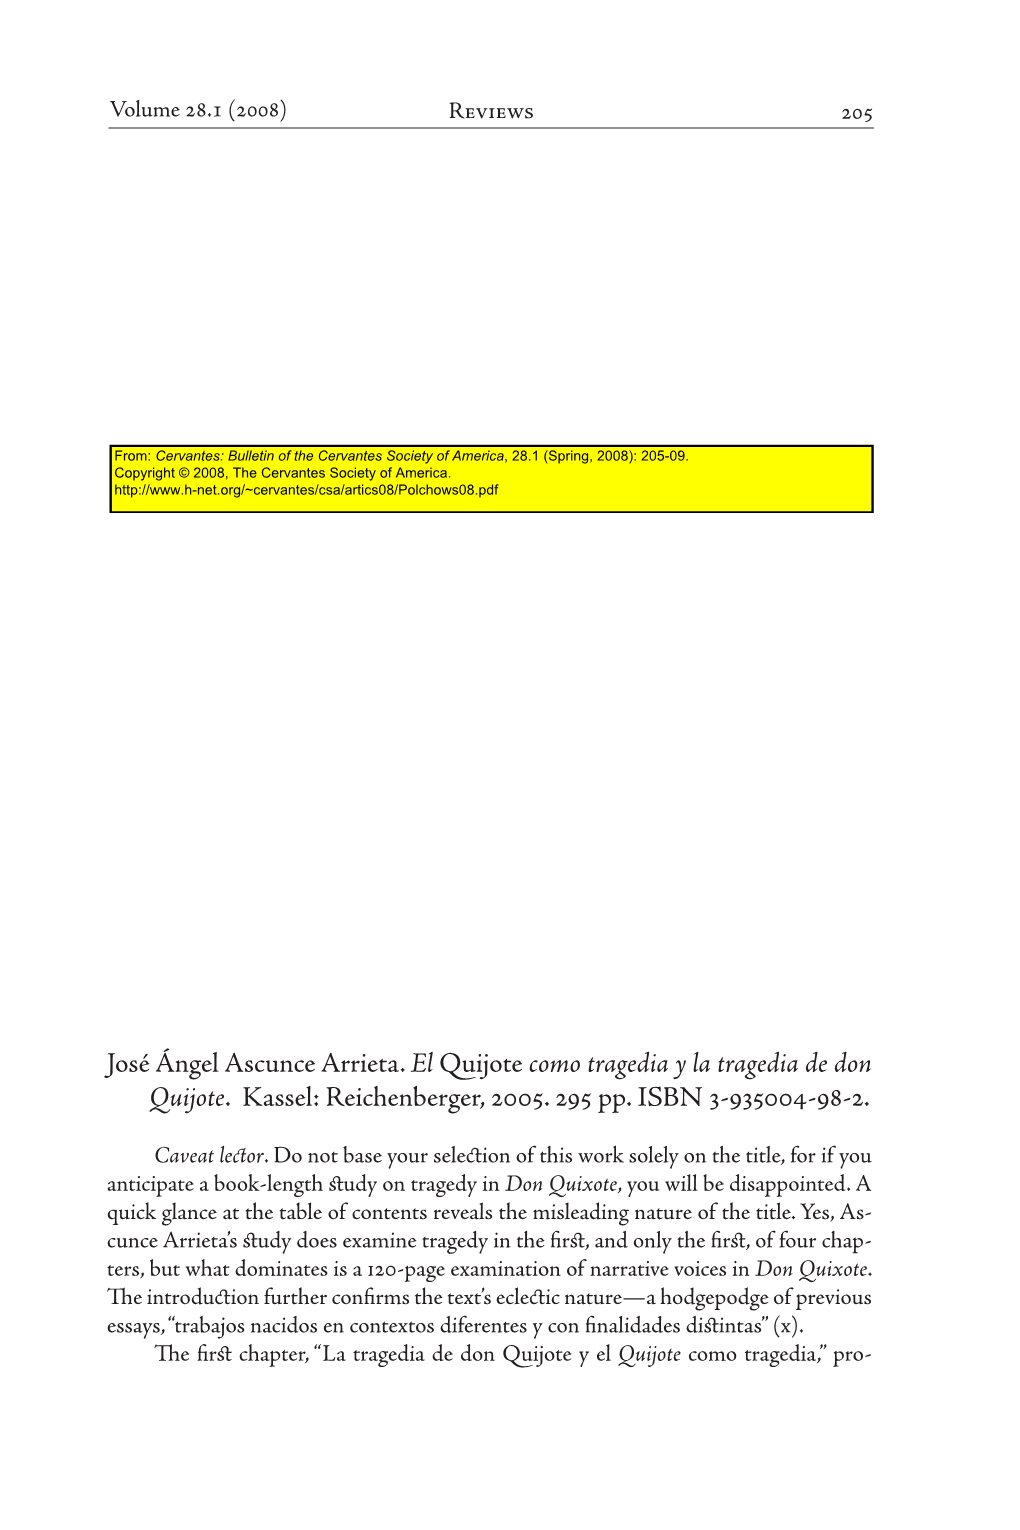 Review of José Ángel Ascunce Arrieta's Book: El Quijote Como